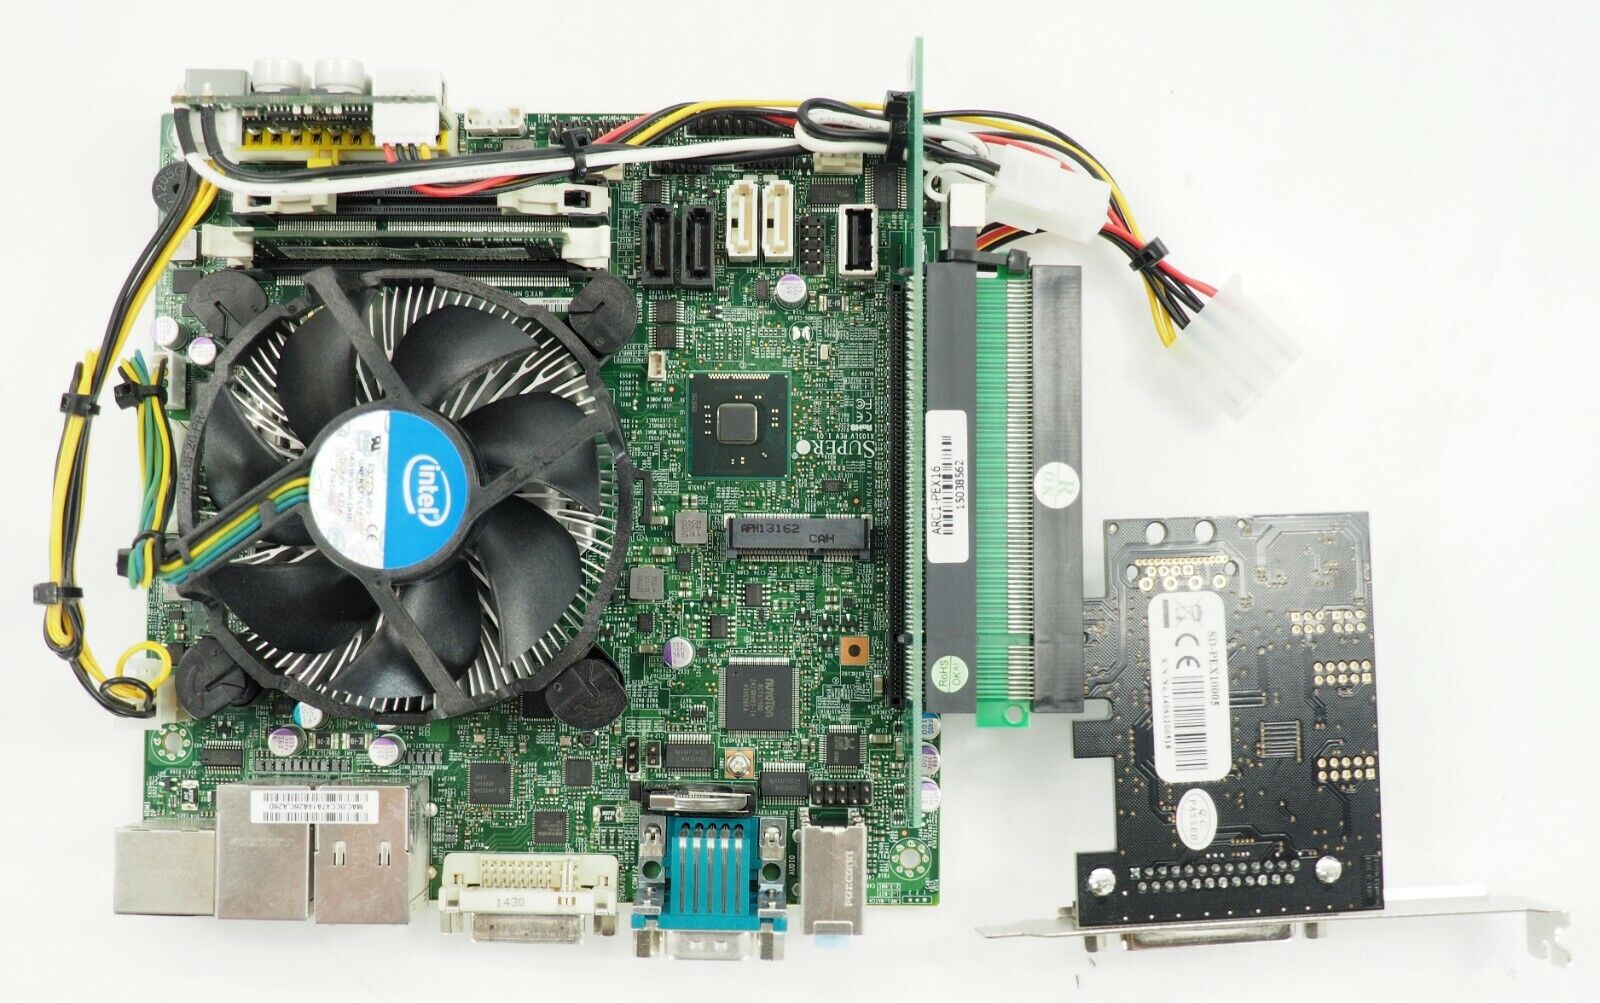  SuperMicro X10SLV Mini-ITX Motherboard with SR1NB CPU, 4GB RAM, SD-PEX10005 Mod